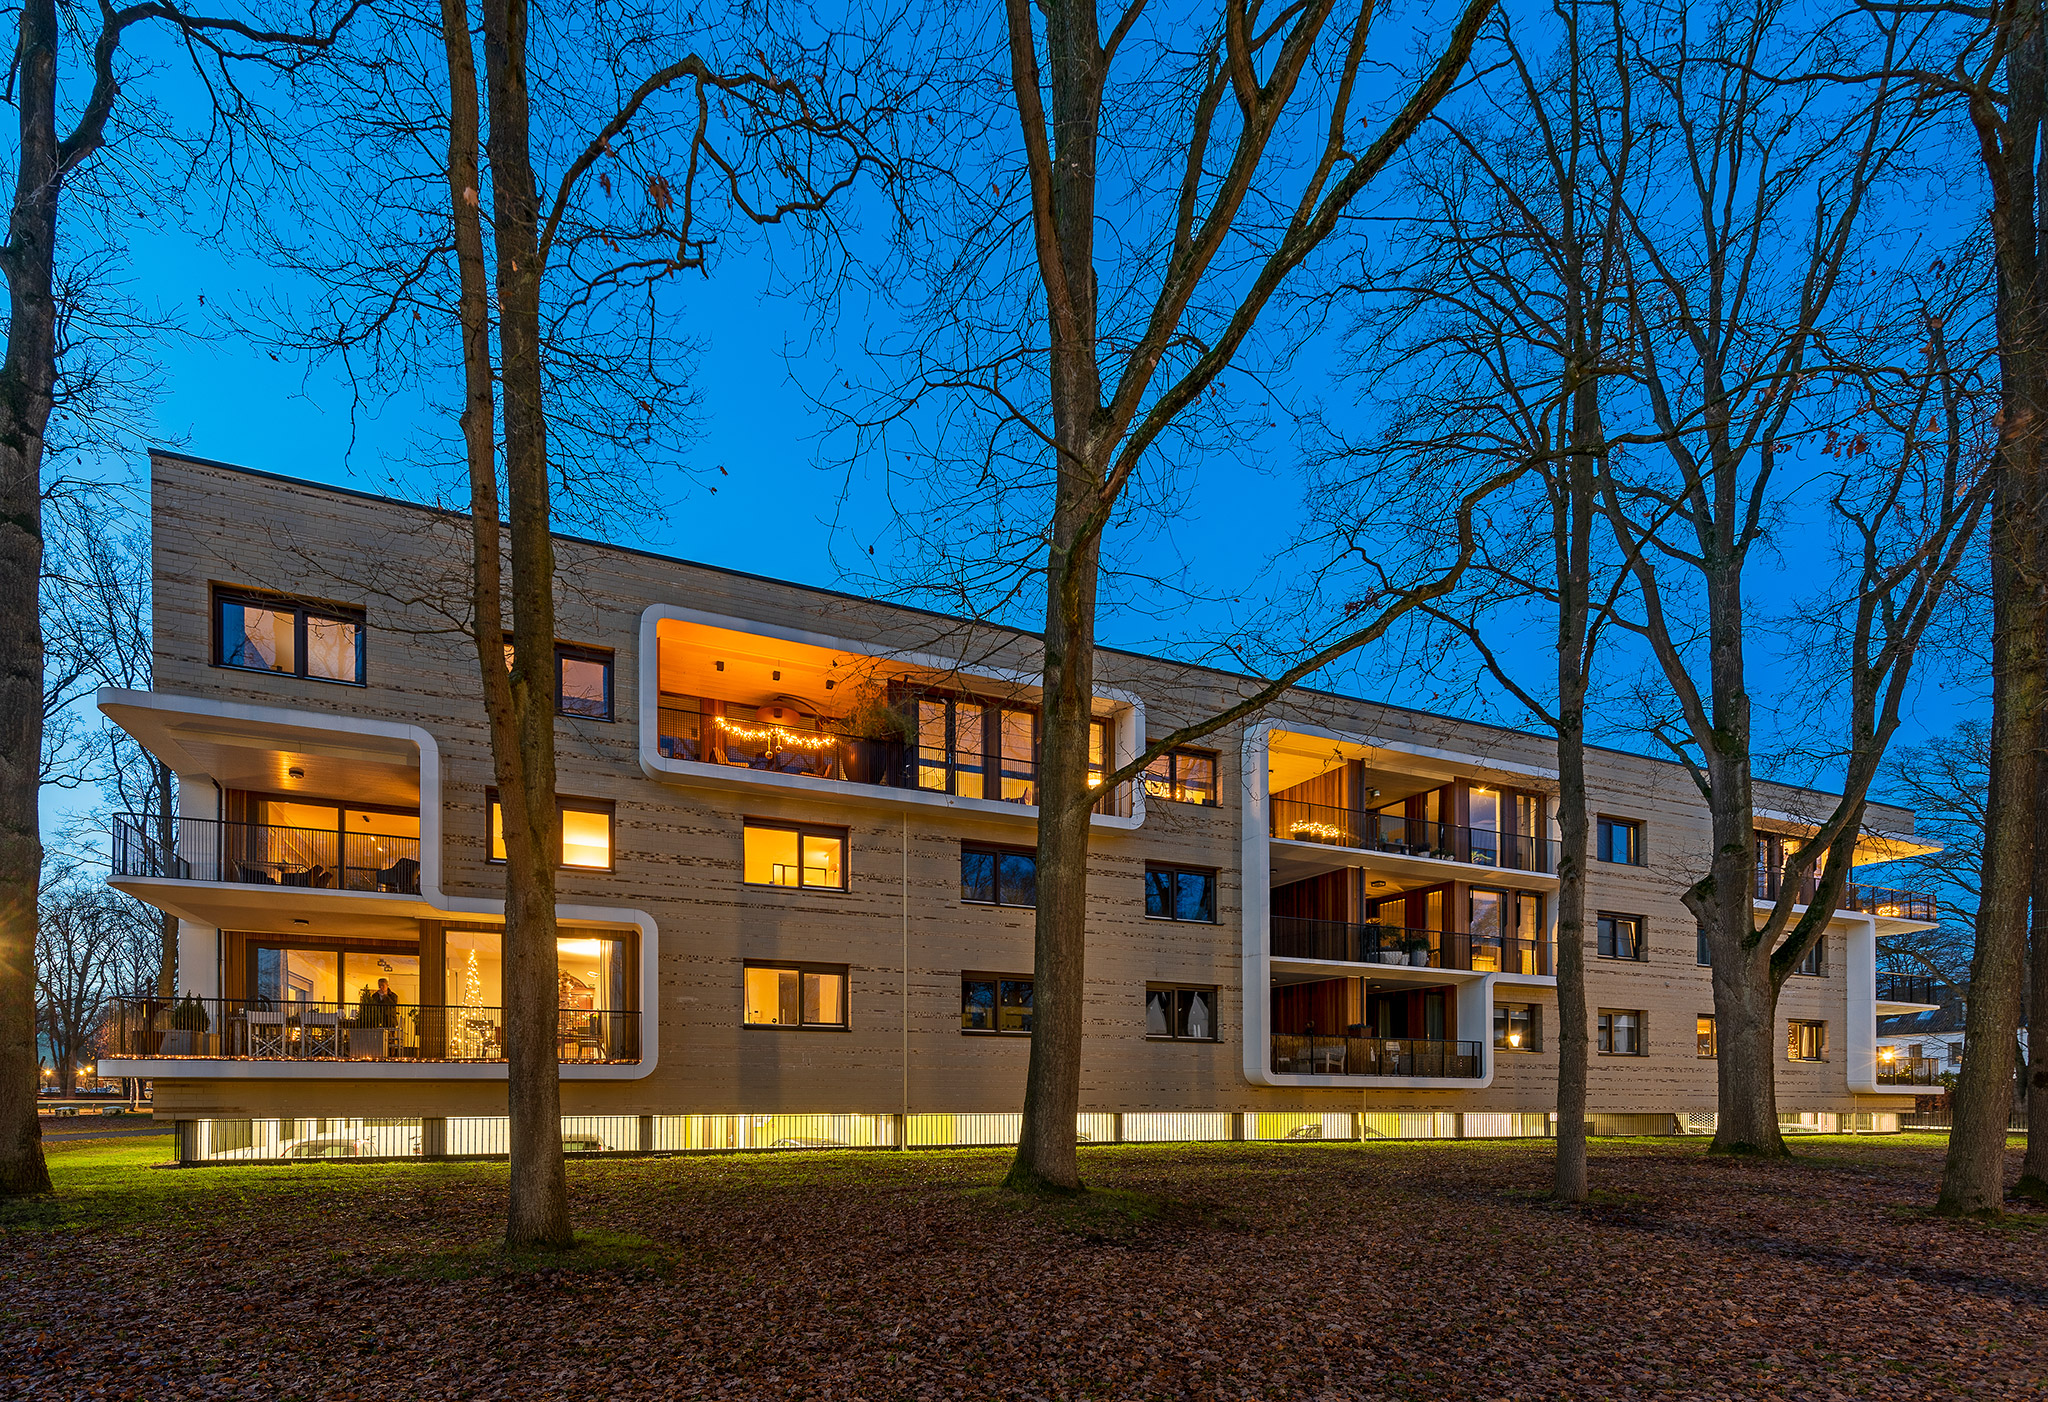 Simone Drost Architecture Planet Pab Architecture Appartementen Stdhouderspark Vught voorgevel bij schemer 